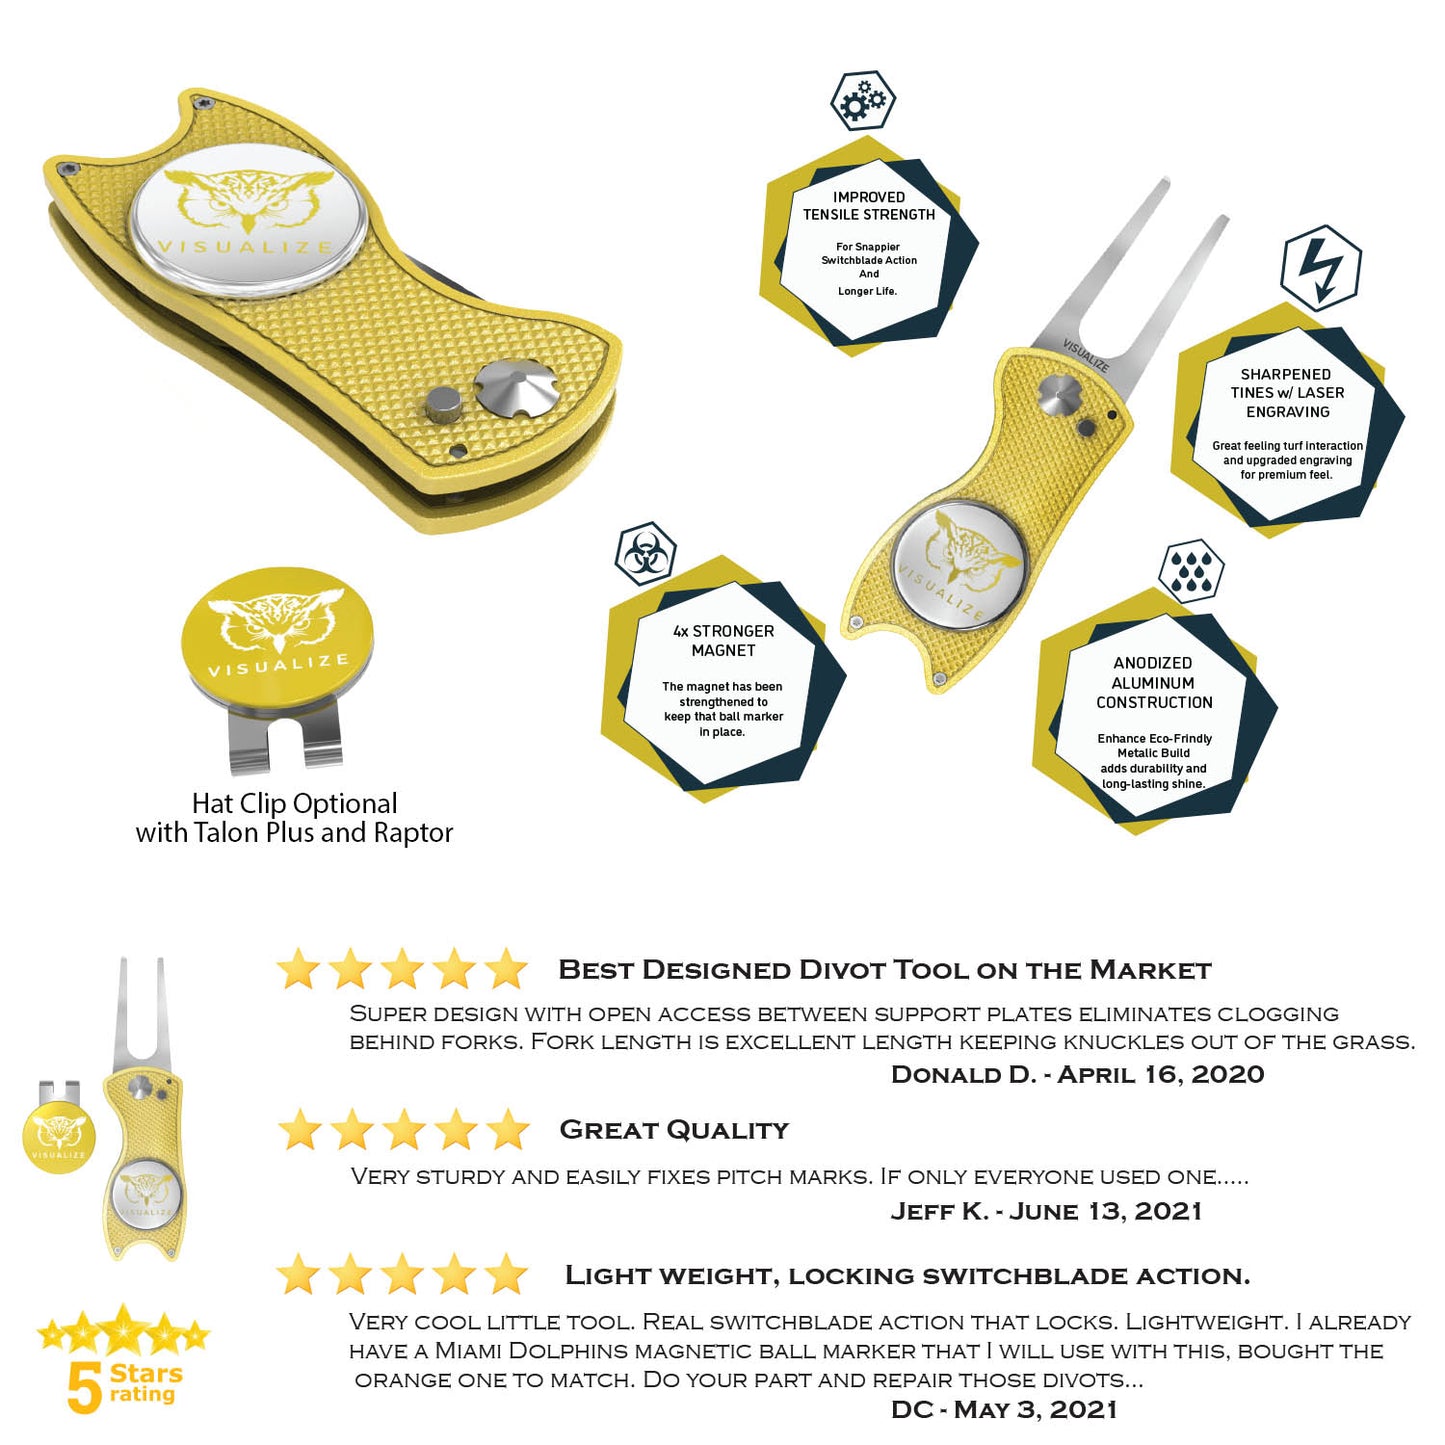 The ORIGINAL TALON | Switchblade-Style Divot Repair Tool - METALIC PINK